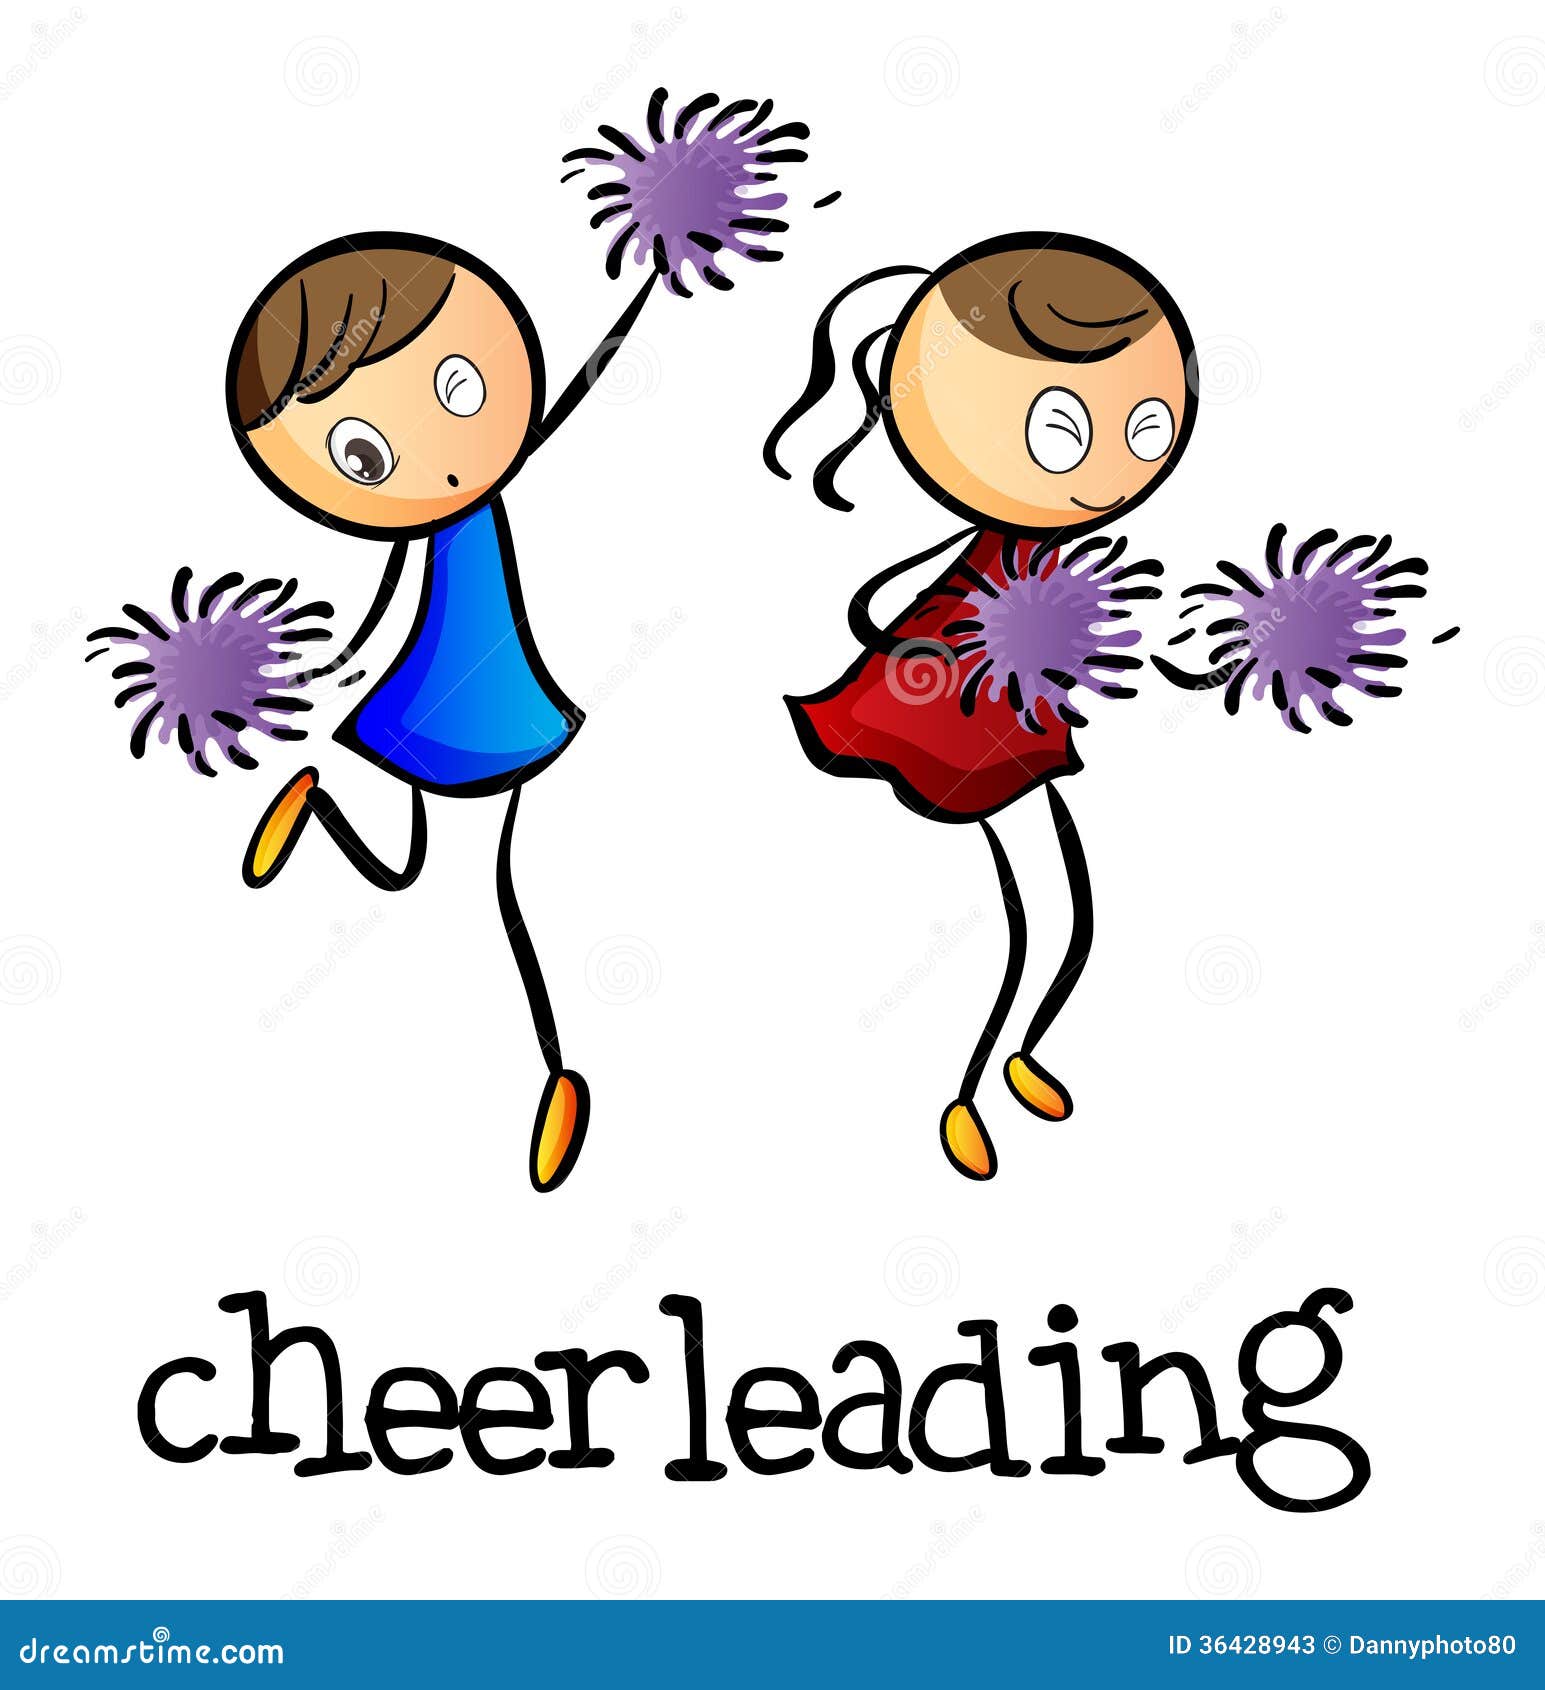 free animated clipart cheerleader - photo #40